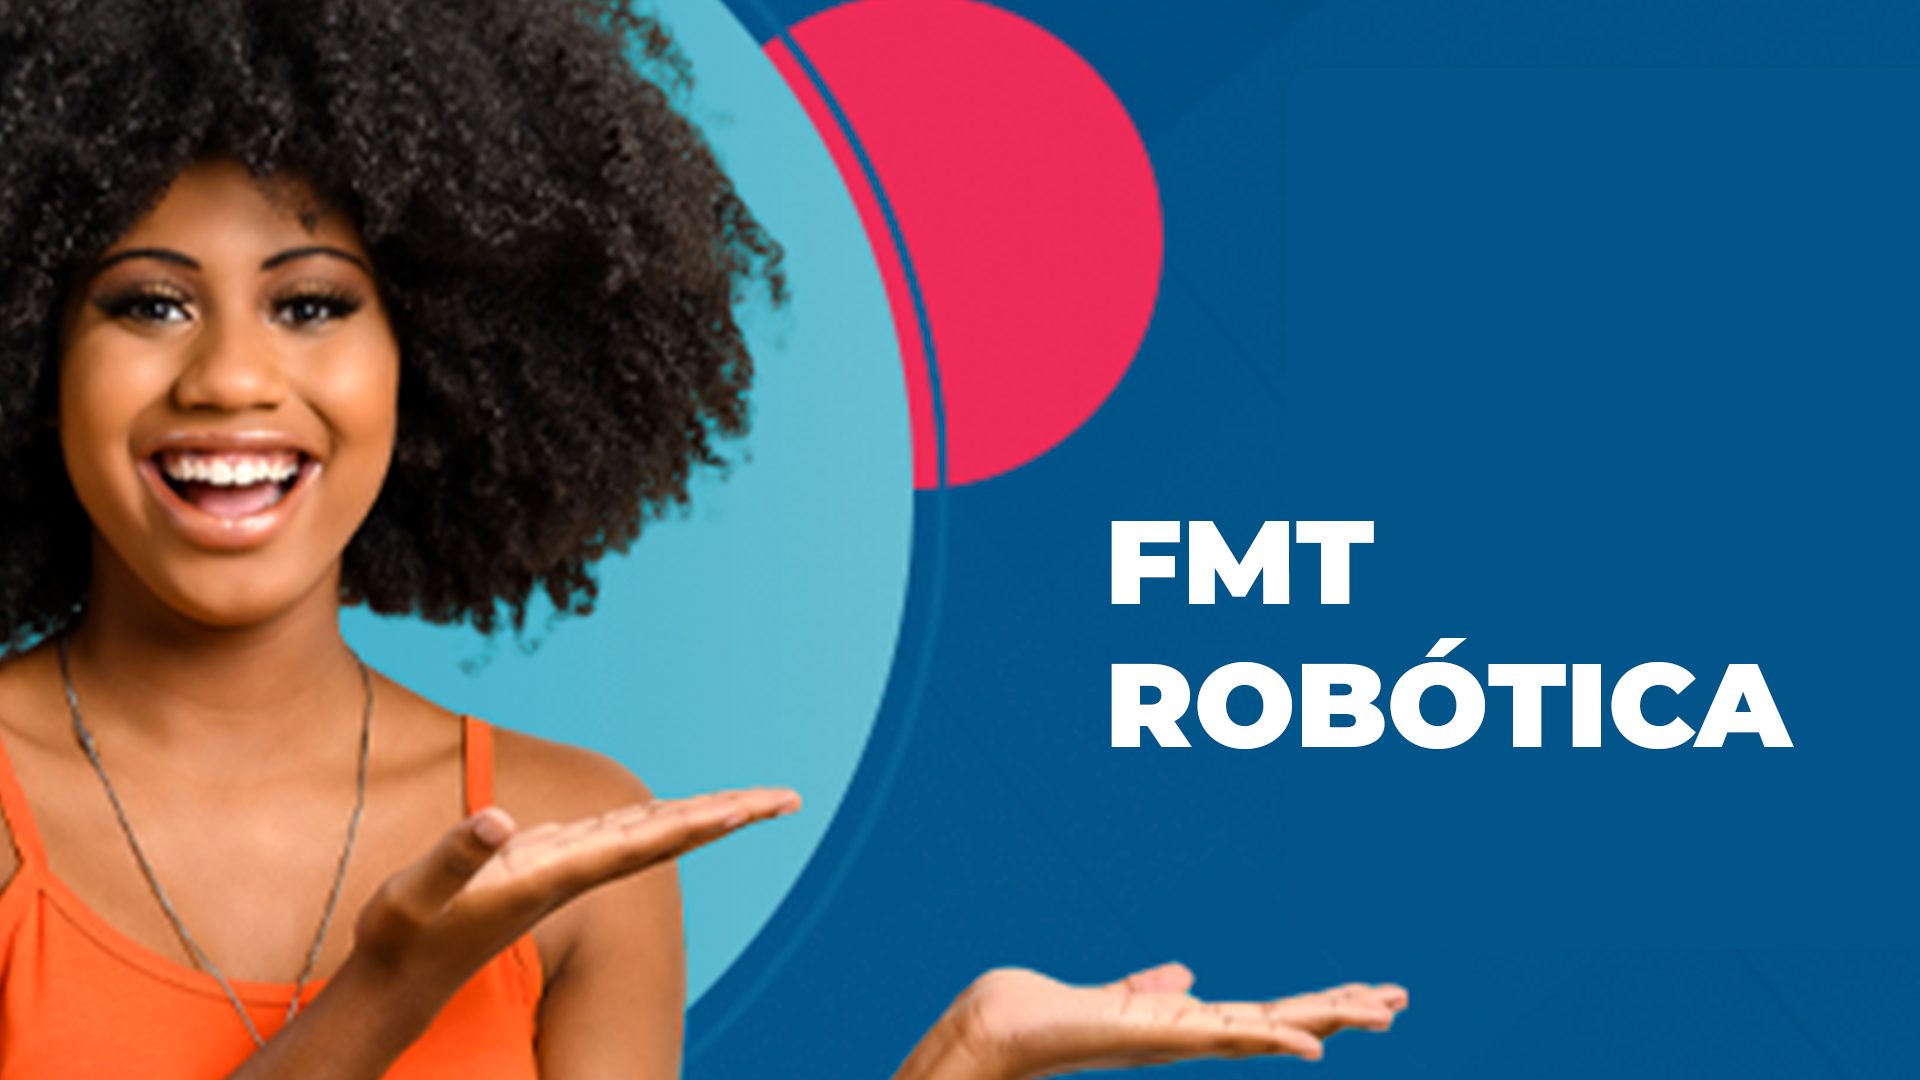 Jovem negra apresenta a legenda FMT robótica